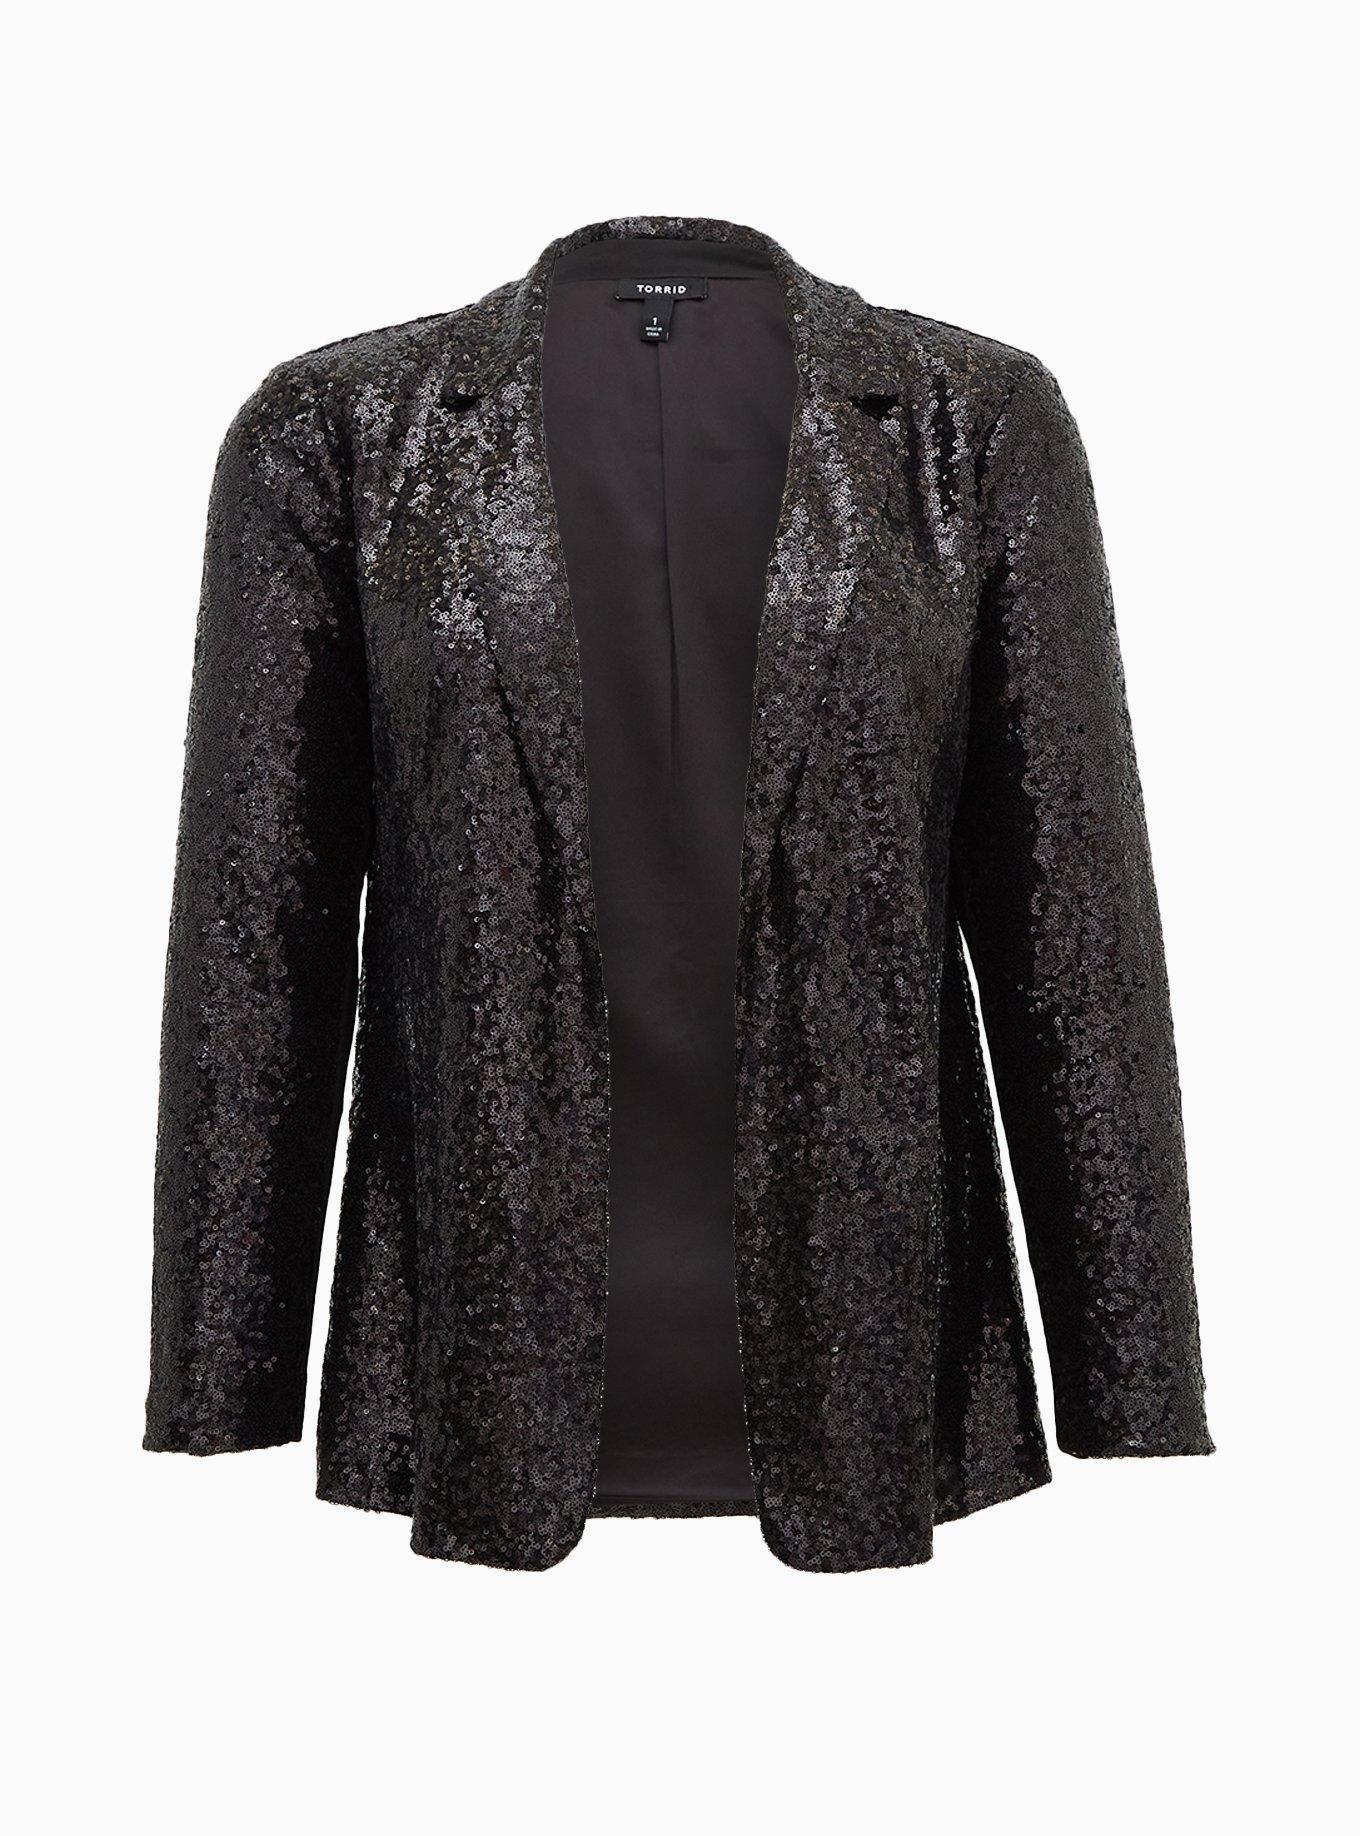 Plus Size - Black Sequin Blazer - Torrid